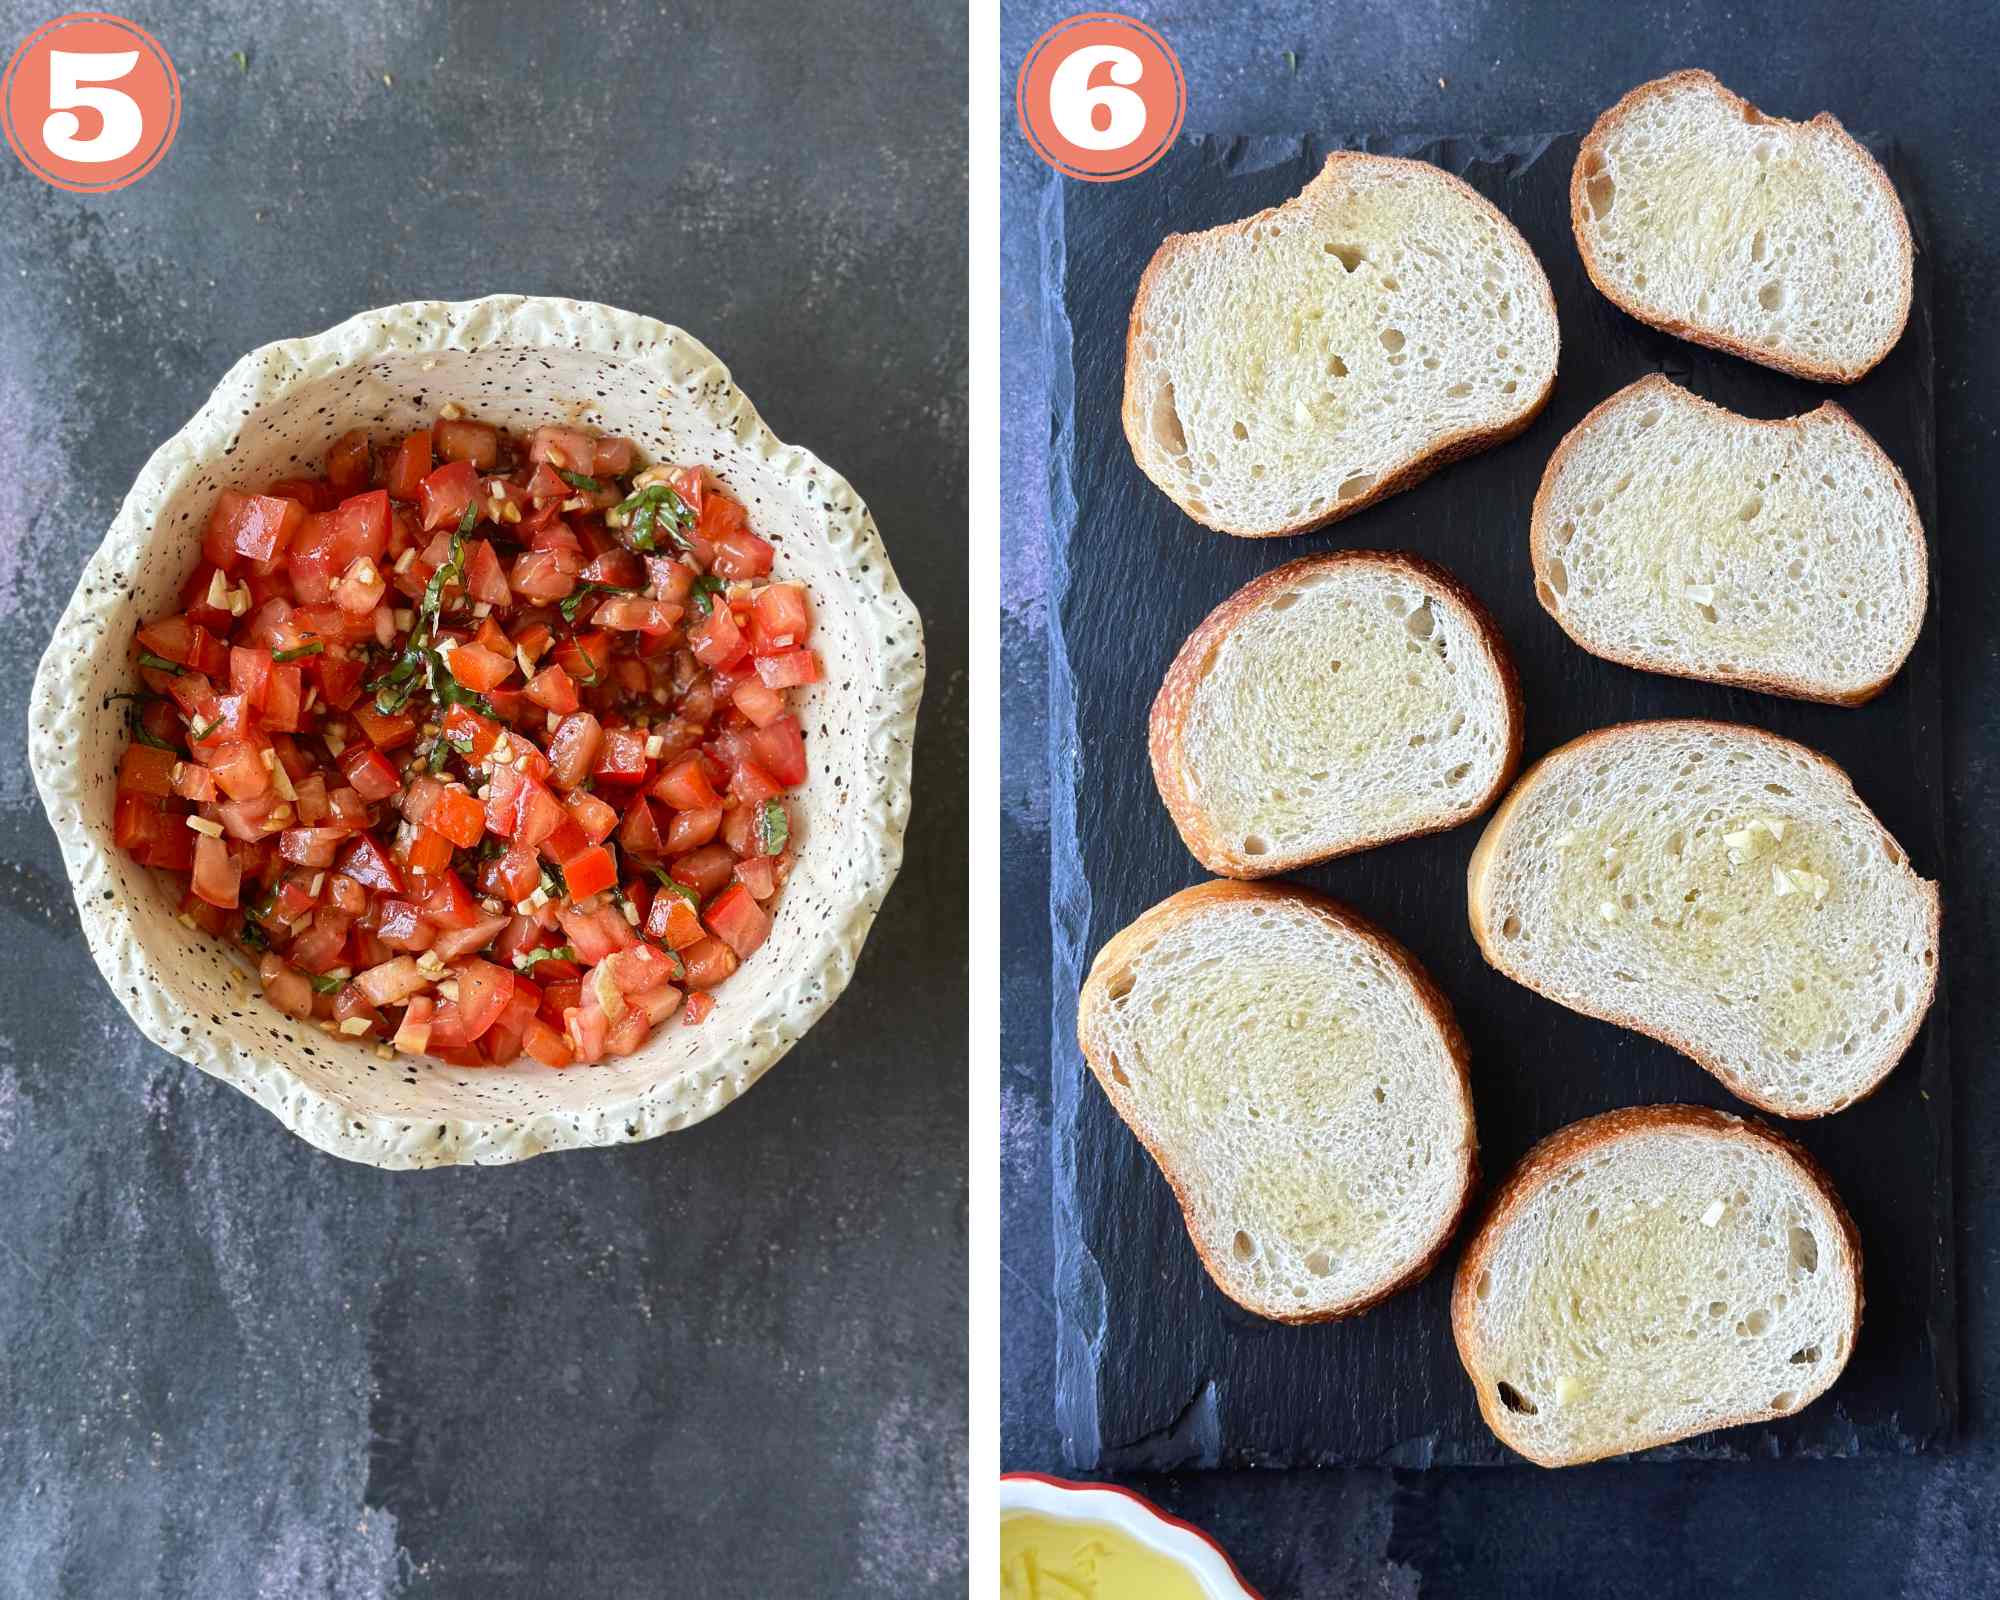 Collage steps to make bruschetta; preparing the tomato mix and spreading olive oil over bread slices. 